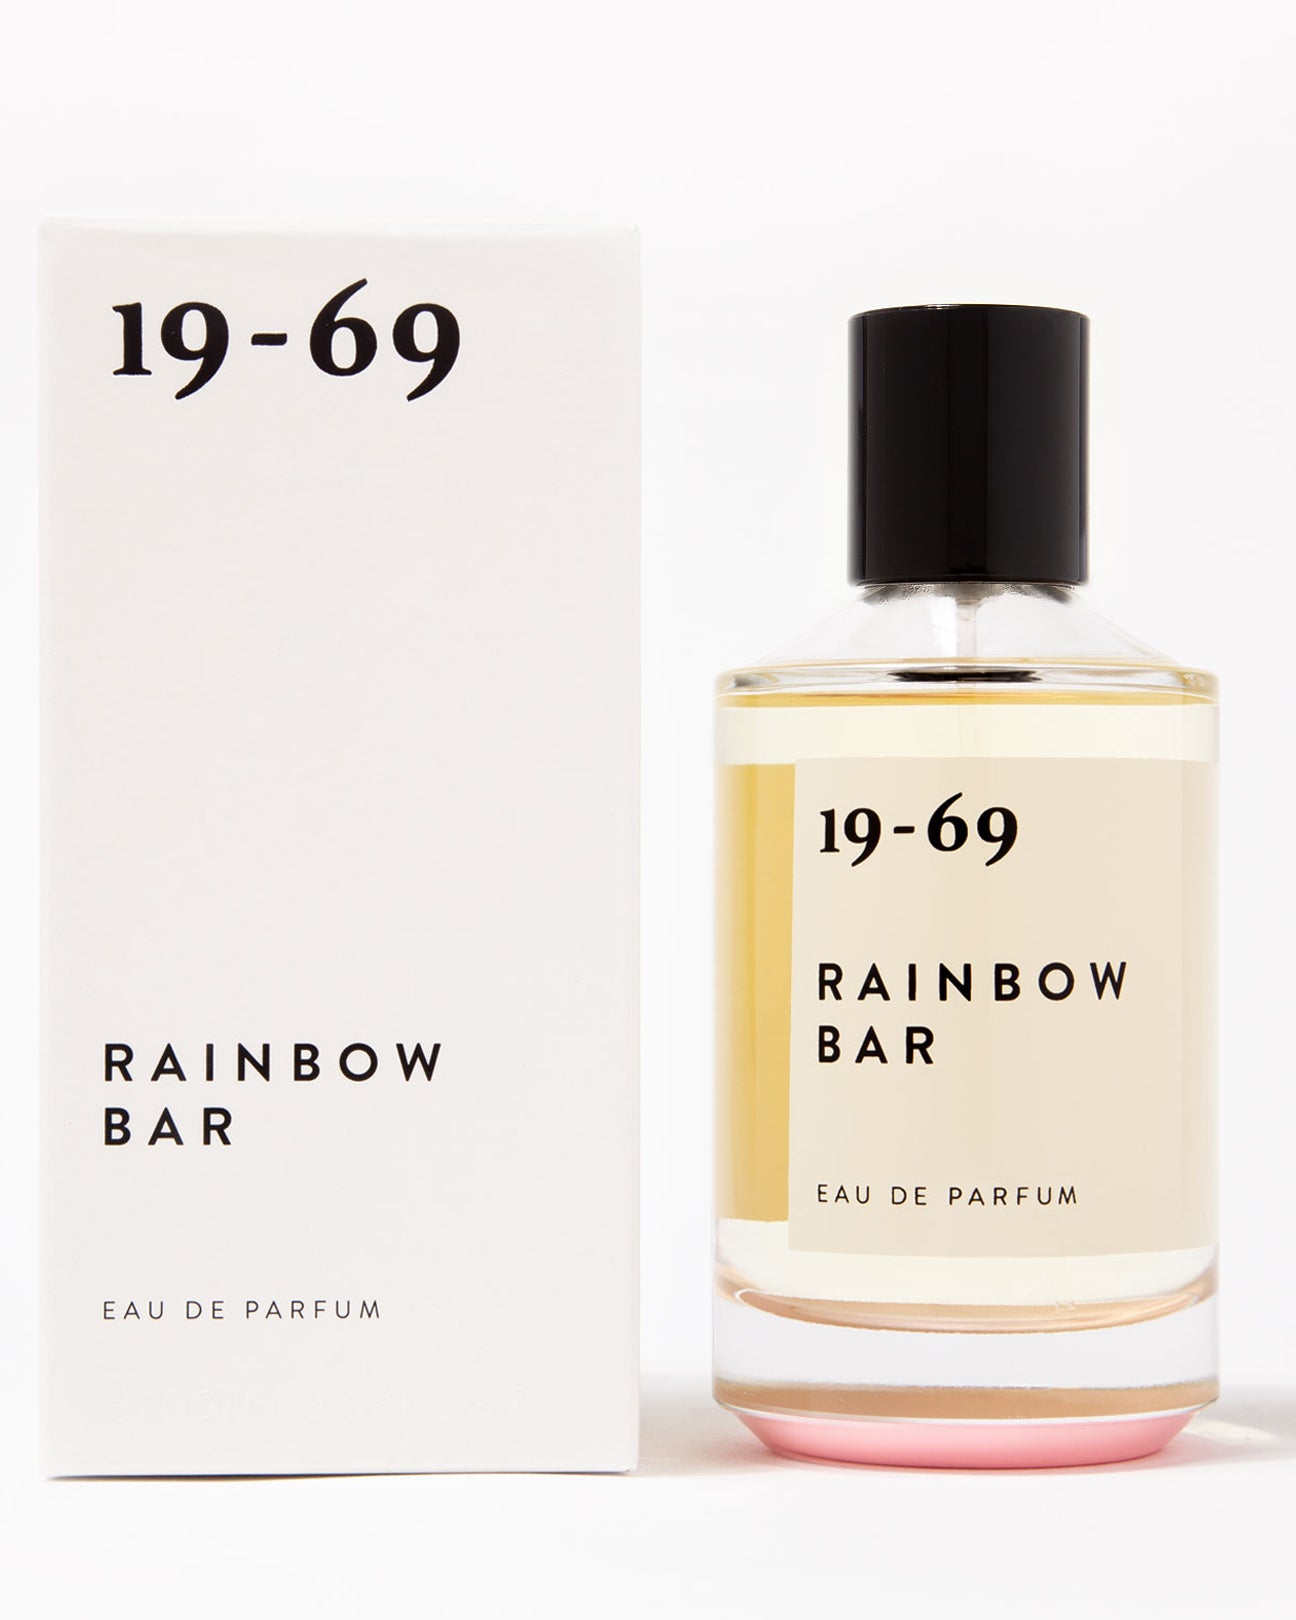 19-69 Eau De Parfum 30ml. in Rainbow Bar